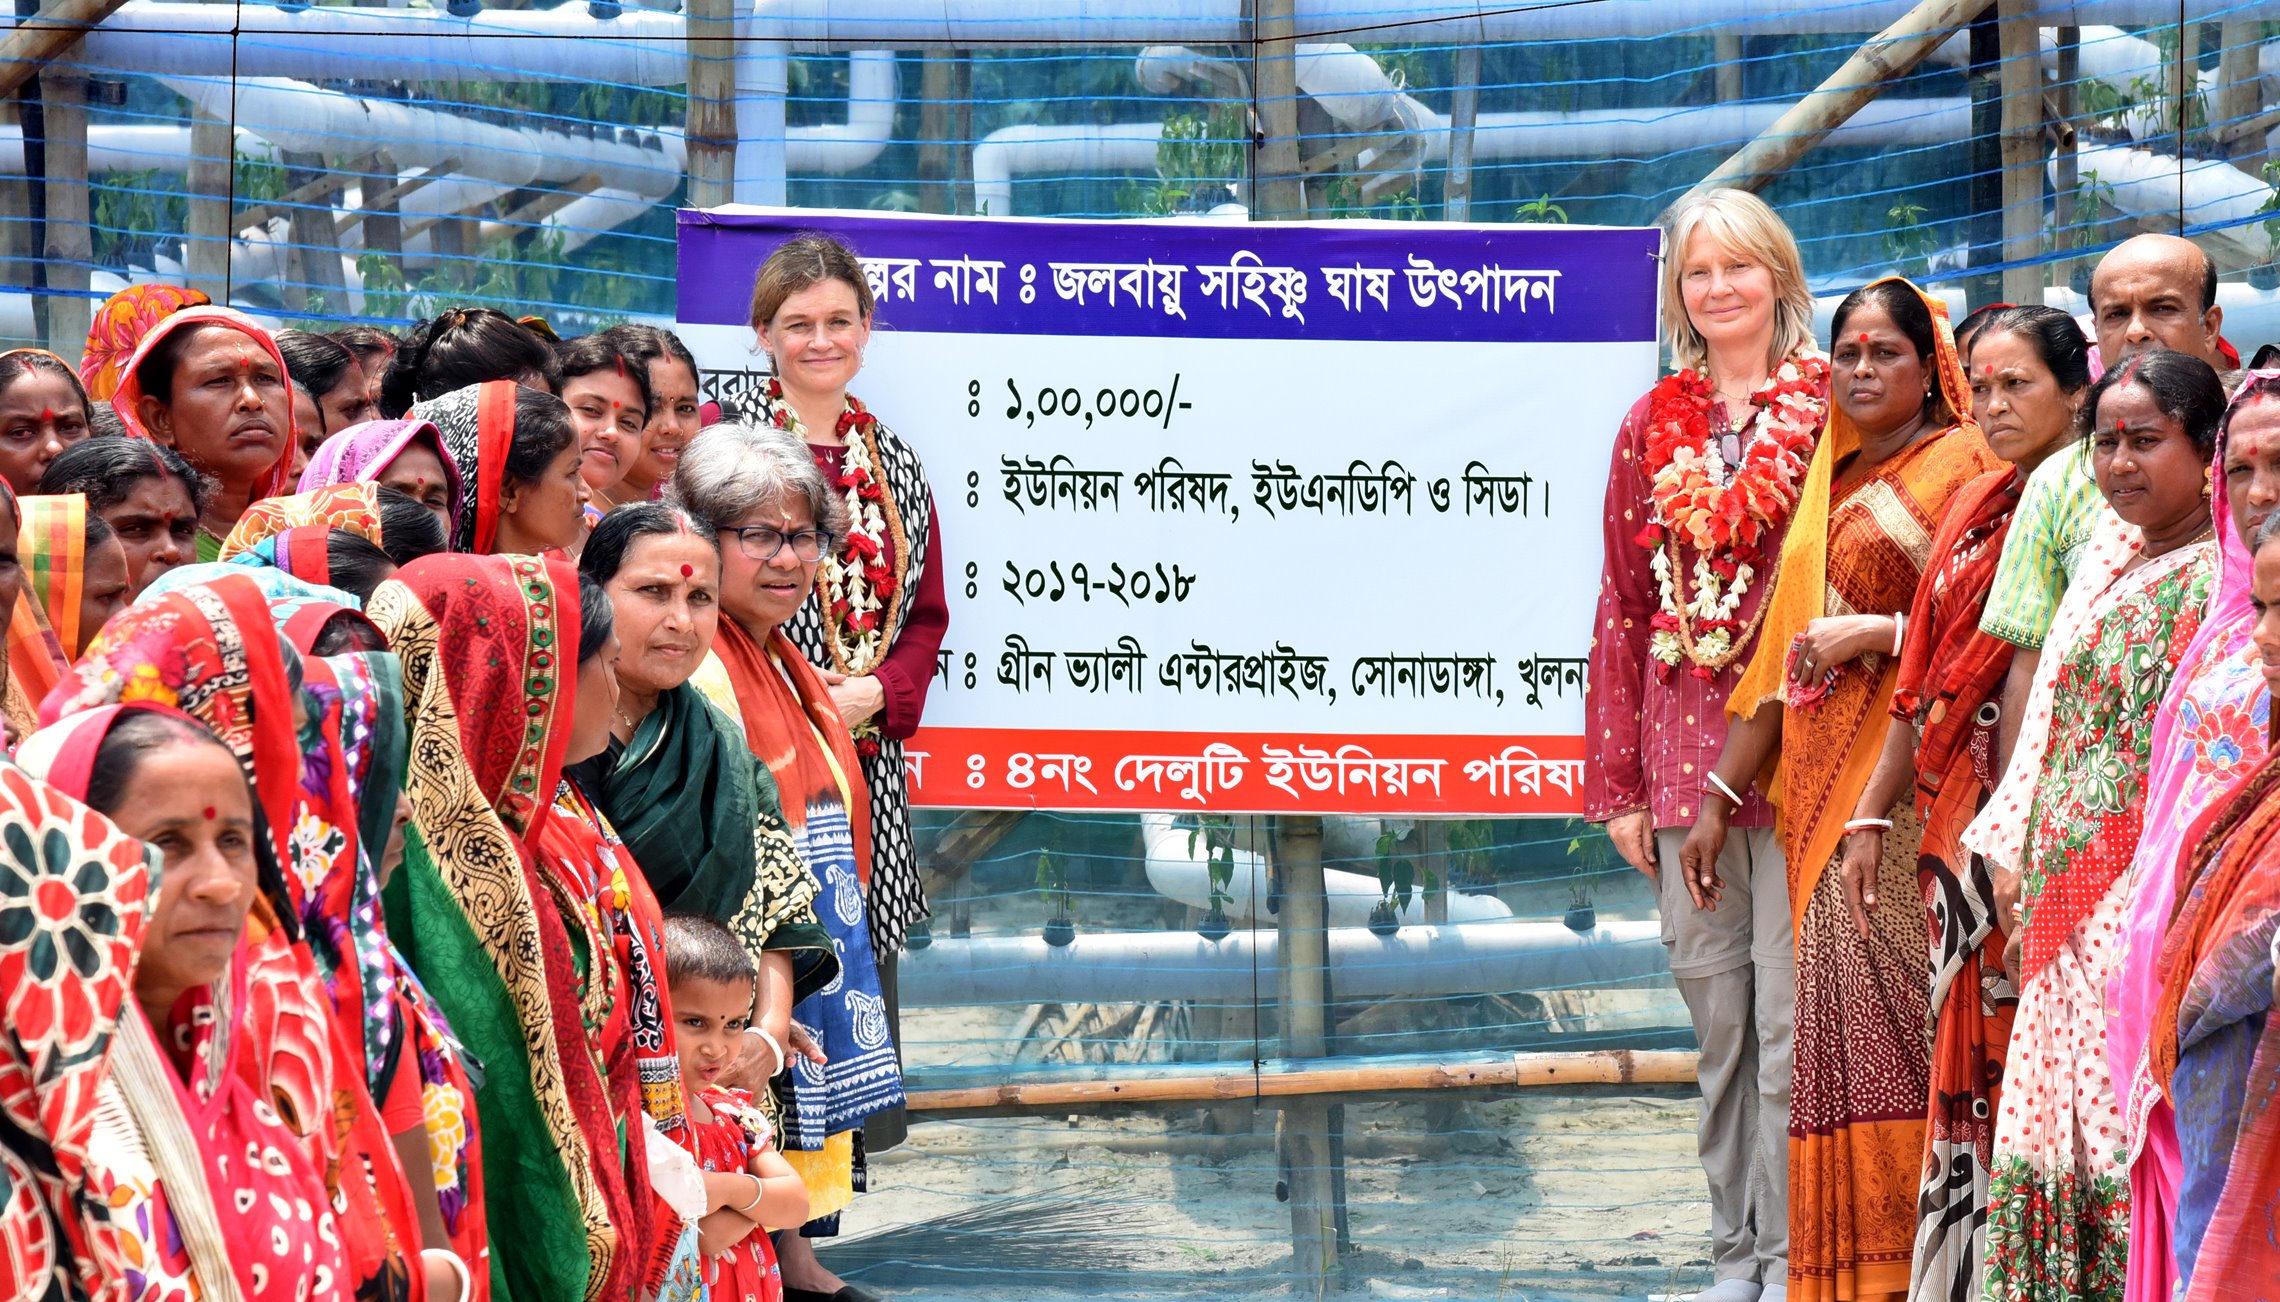 Read Swedish envoys visit by UNDP Bangladesh